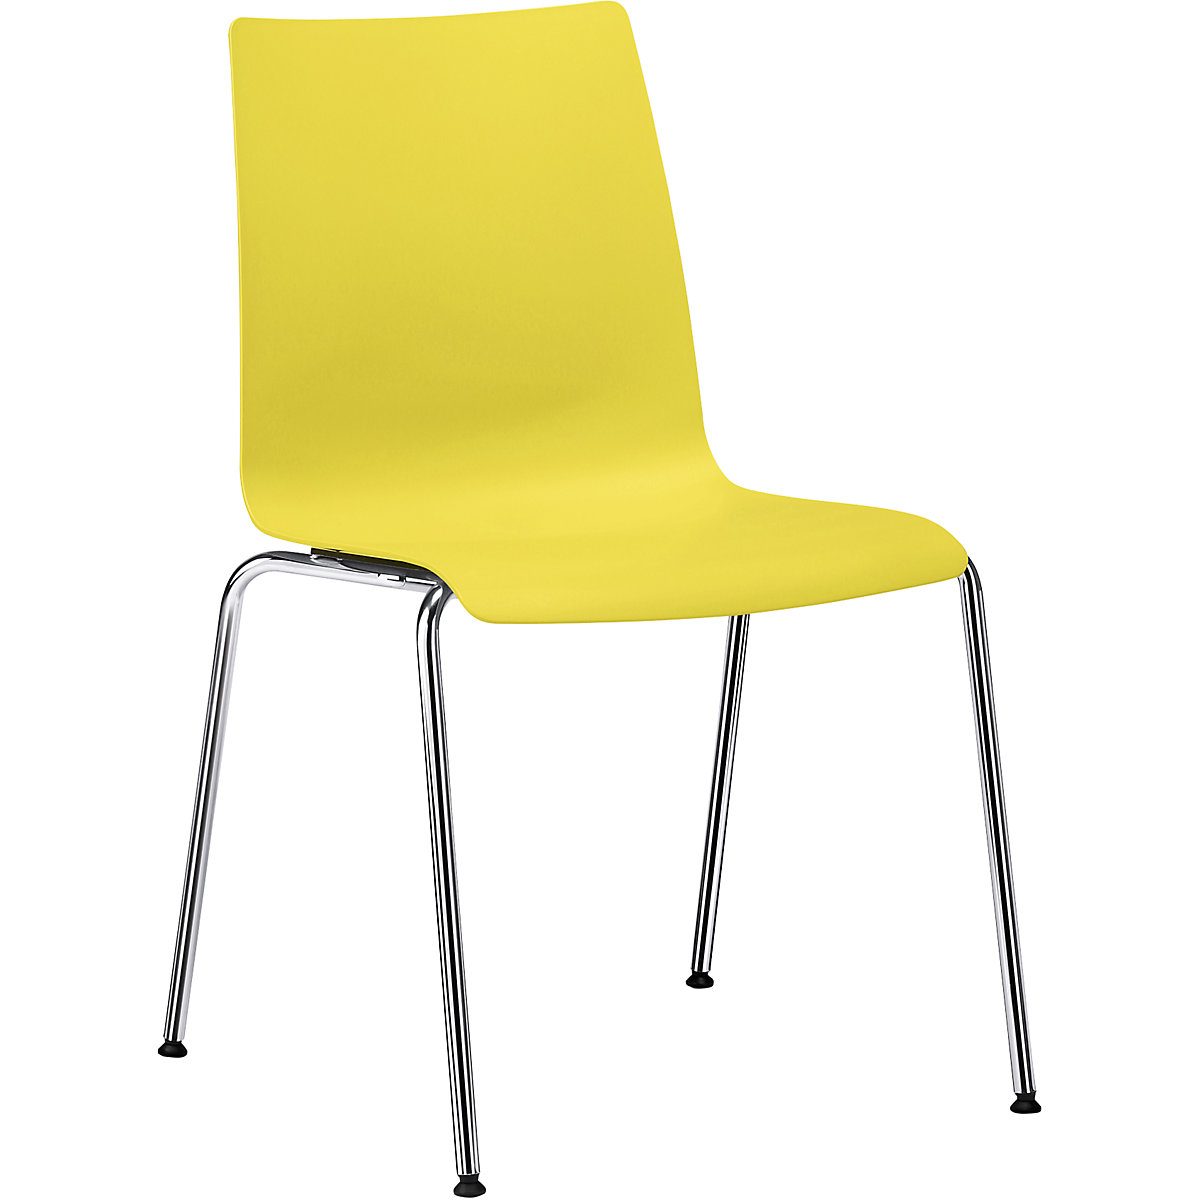 interstuhl – SNIKE contoured plastic chair